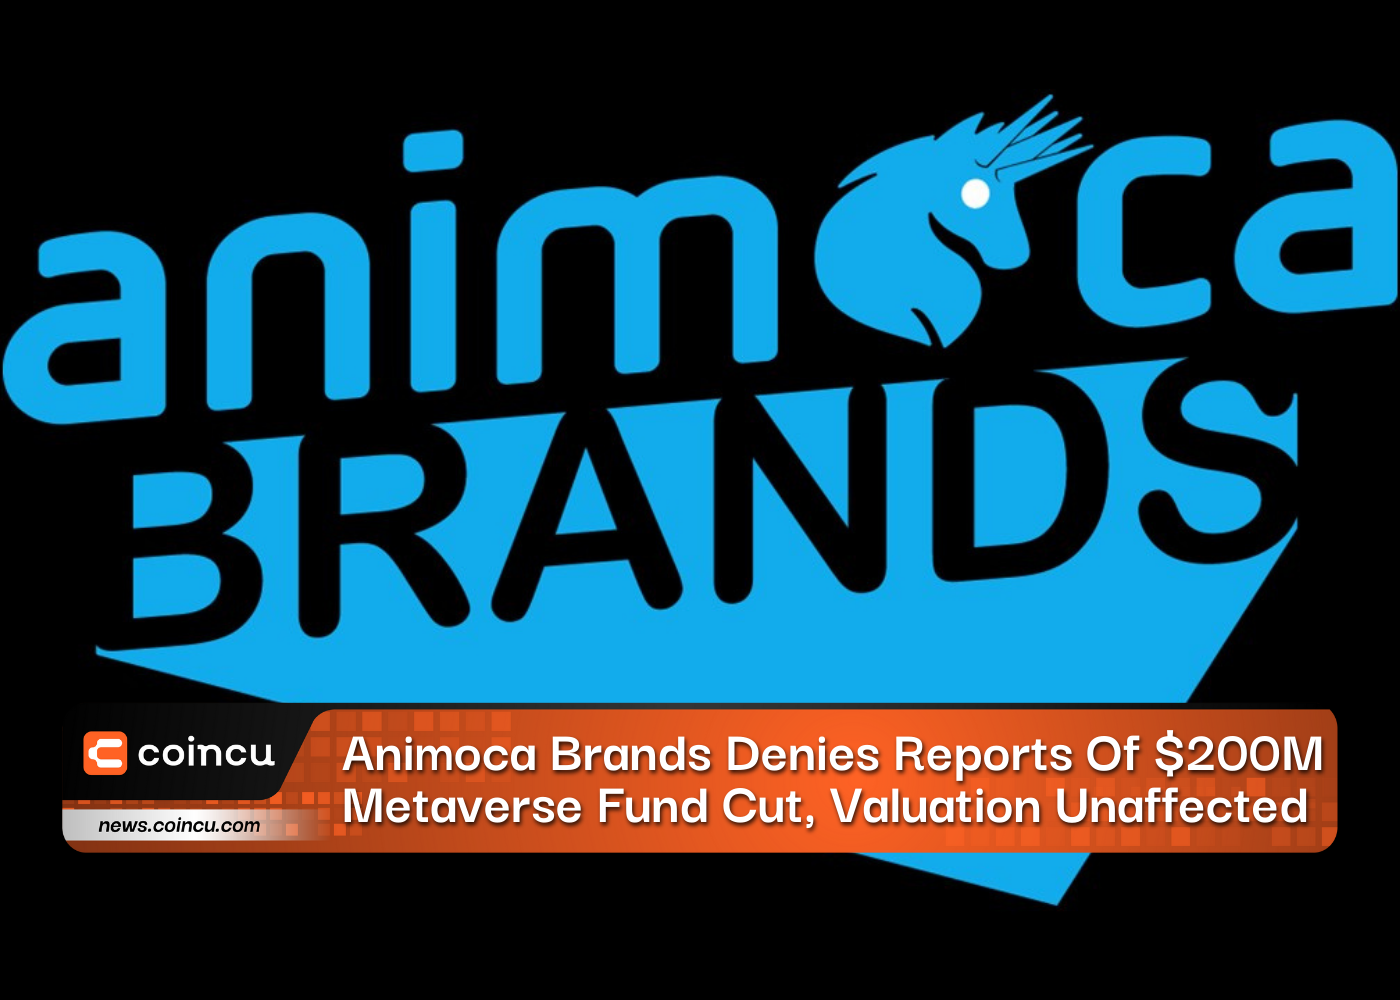 Animoca 브랜드는 200억 건의 보고를 거부했습니다.